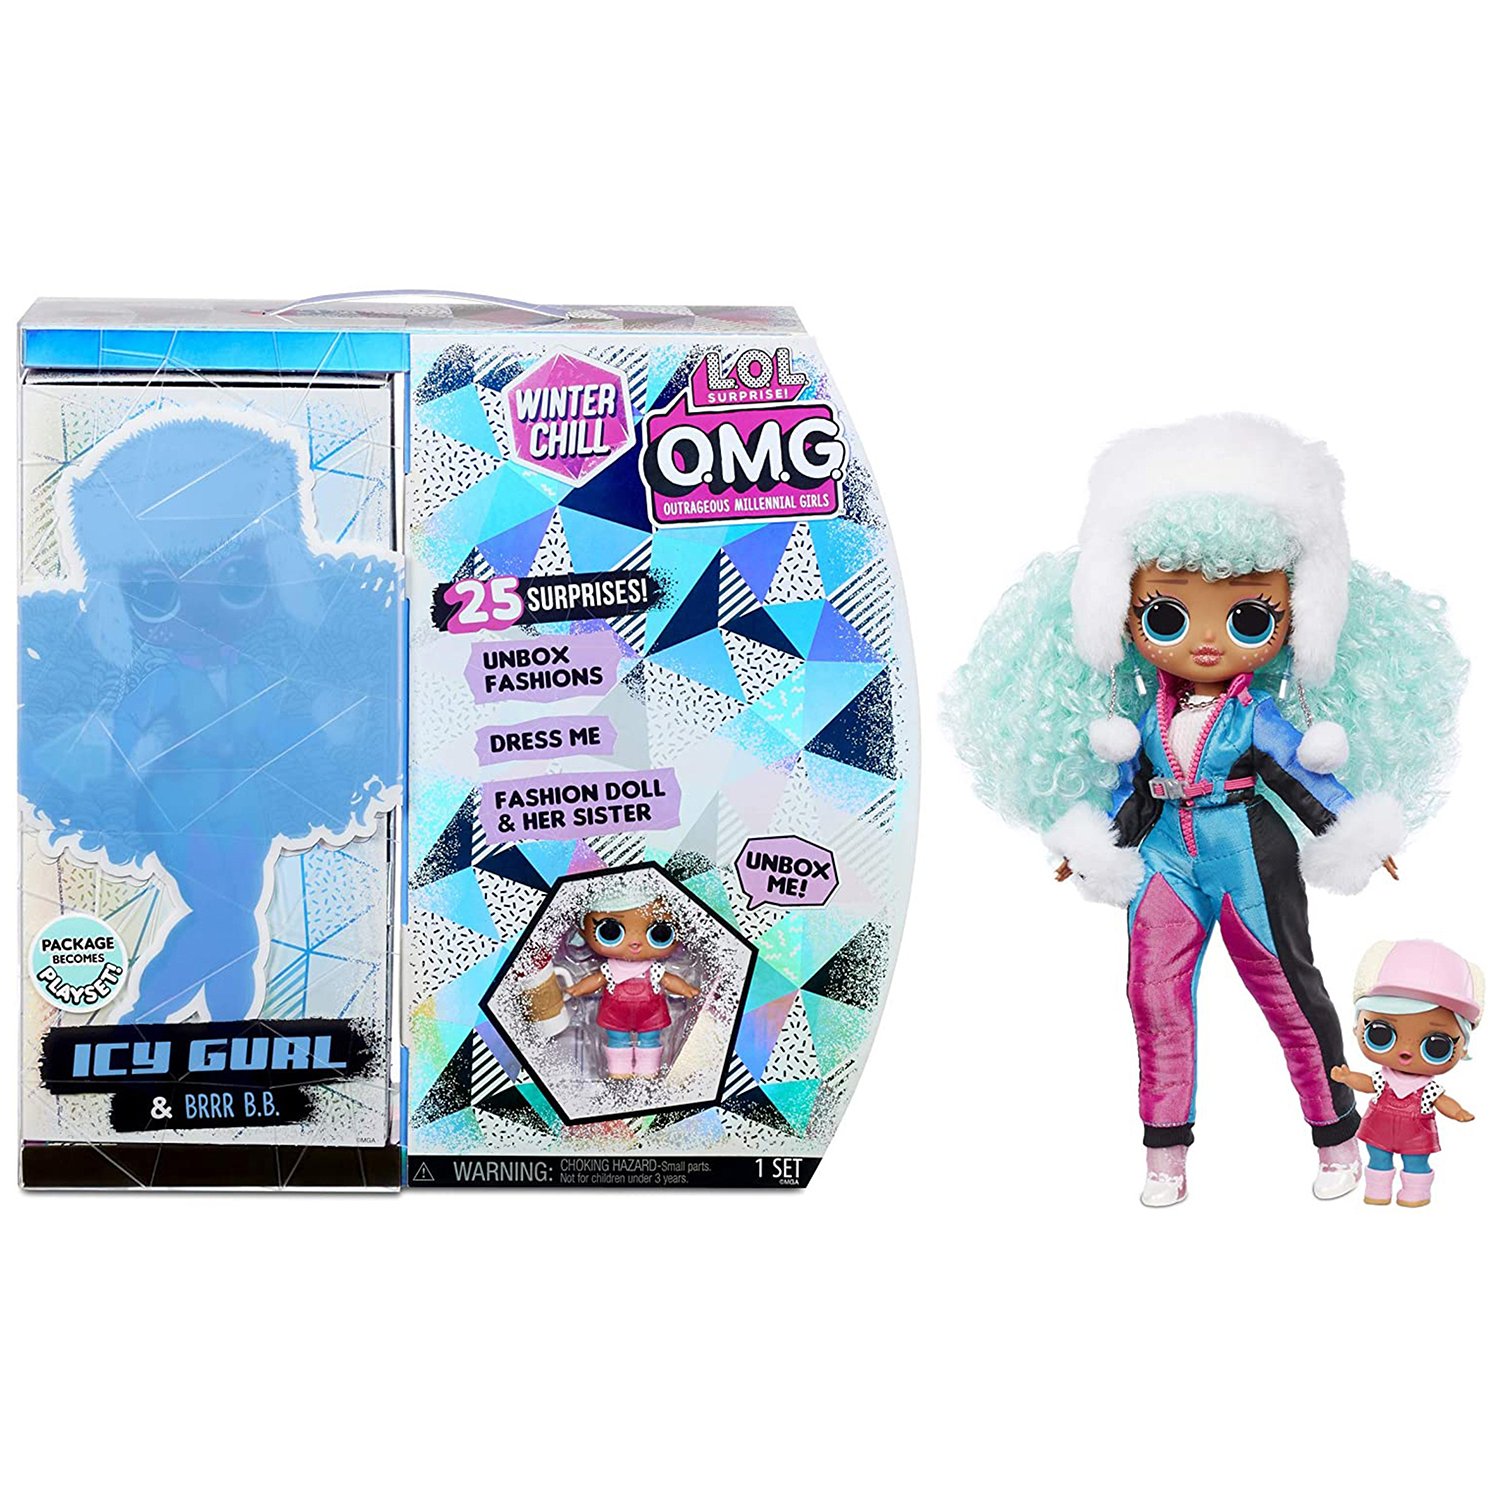 Игровой набор L.O.L. Surprise! O.M.G. Winter Chill Icy Gurl Fashion Doll & Brrr B.B. Doll, 570240